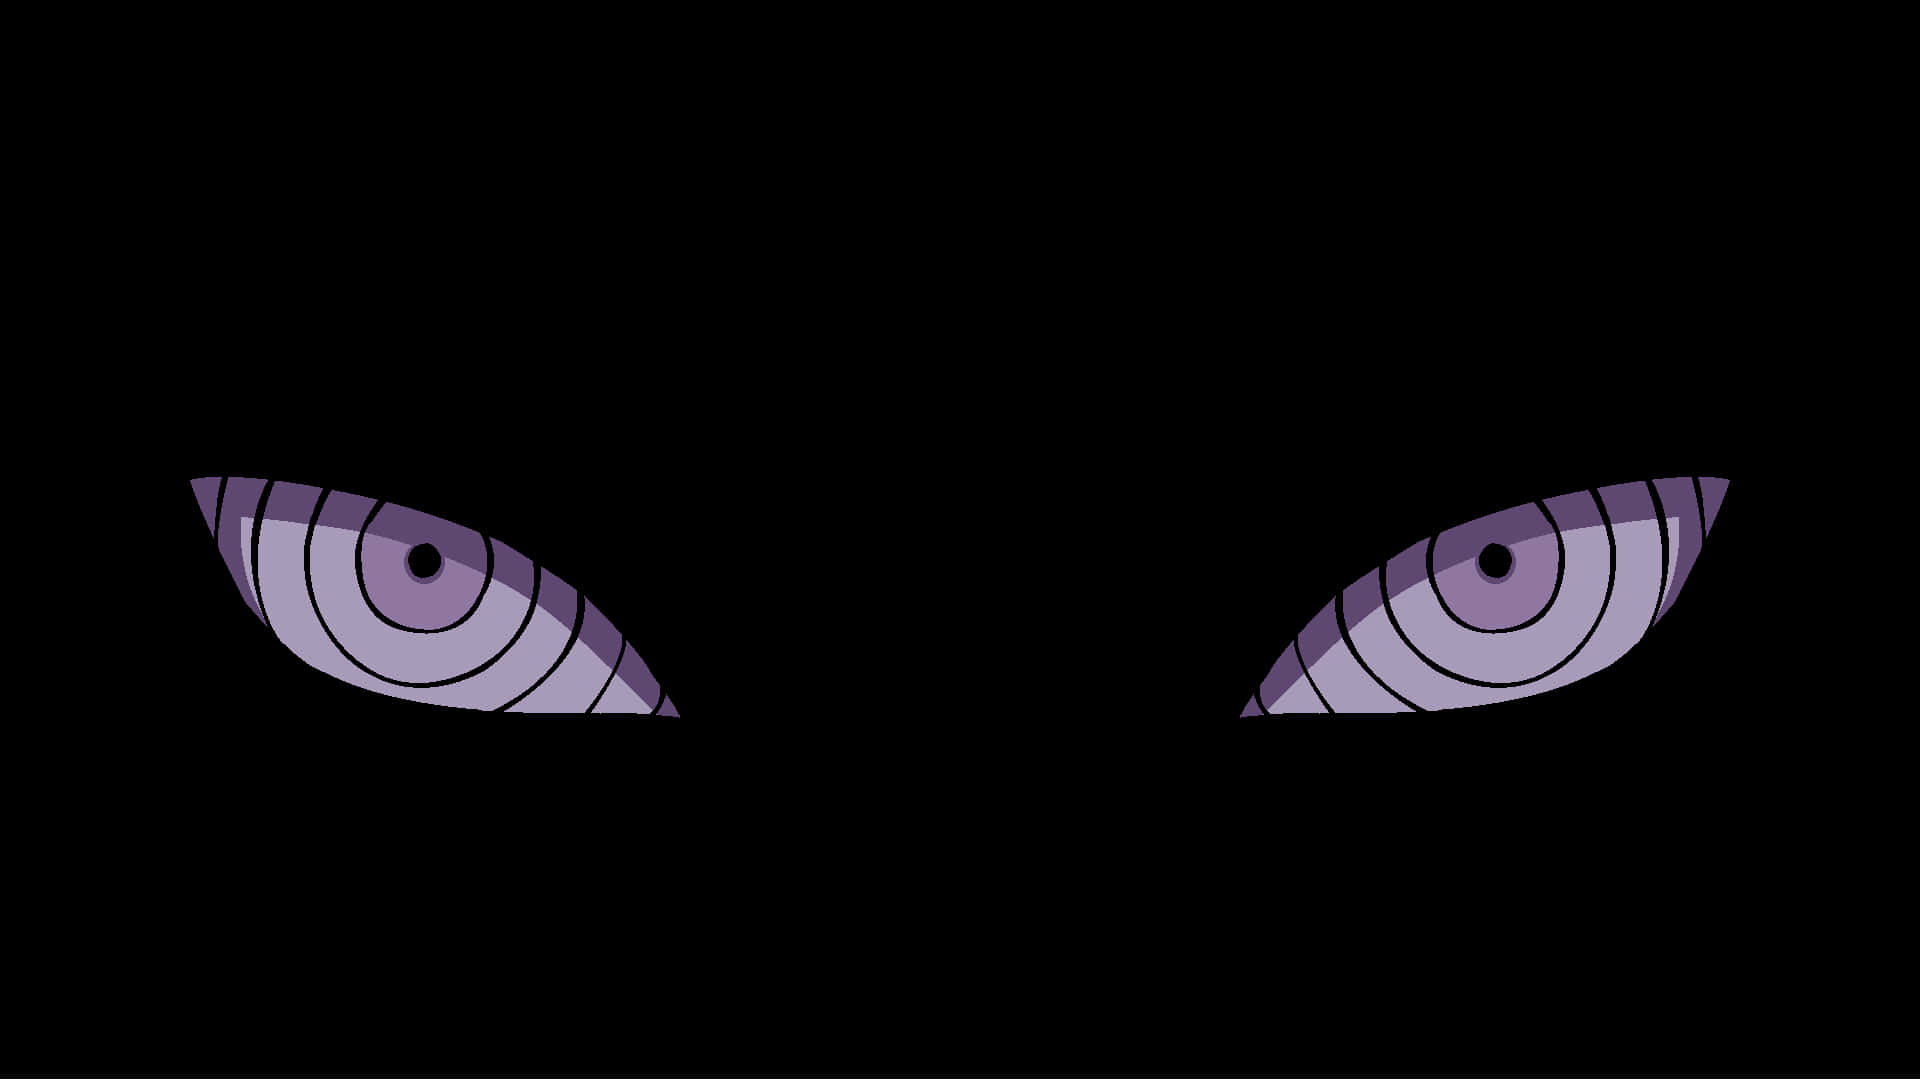 A Purple Eye With Purple Eyes On A Black Background Wallpaper